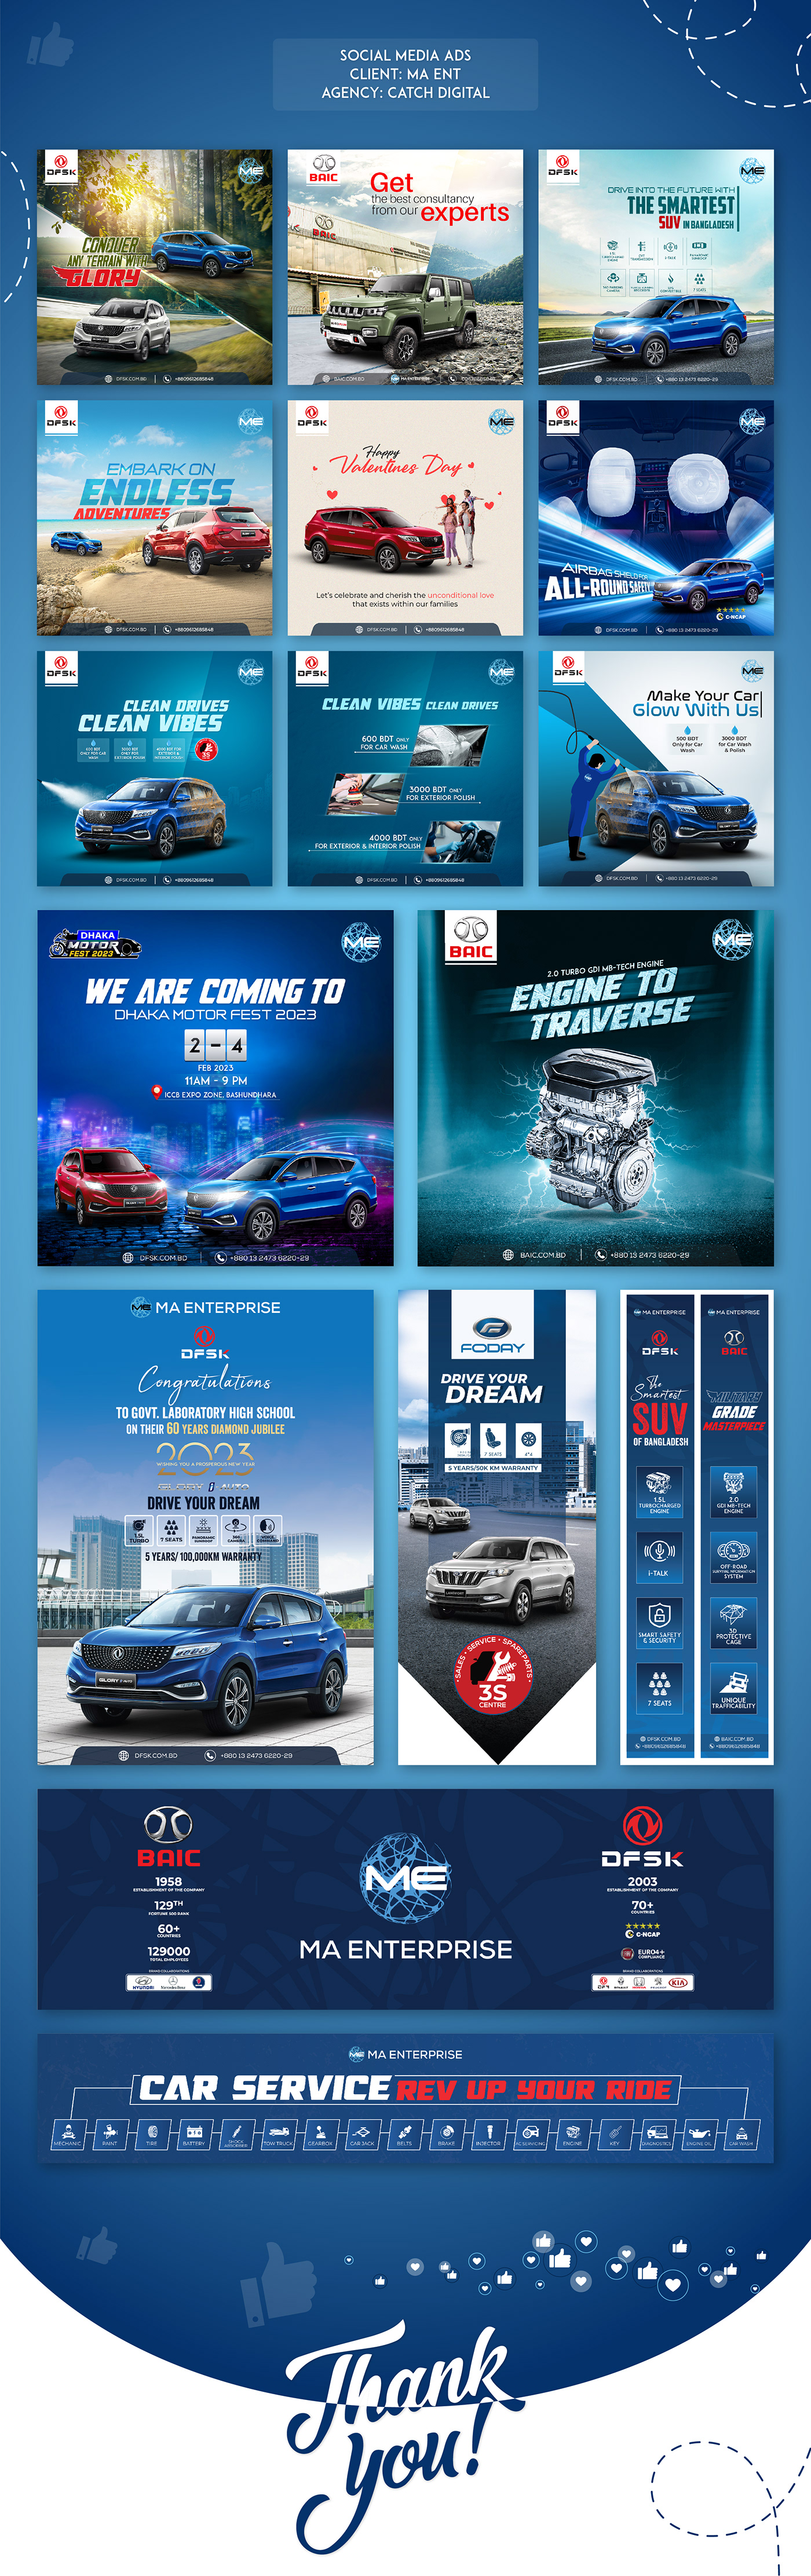 Baic Car creative ads DFSK Car Creative ads graphics design Instagram Ads Social Media ads Vehicle vehicle creative ads